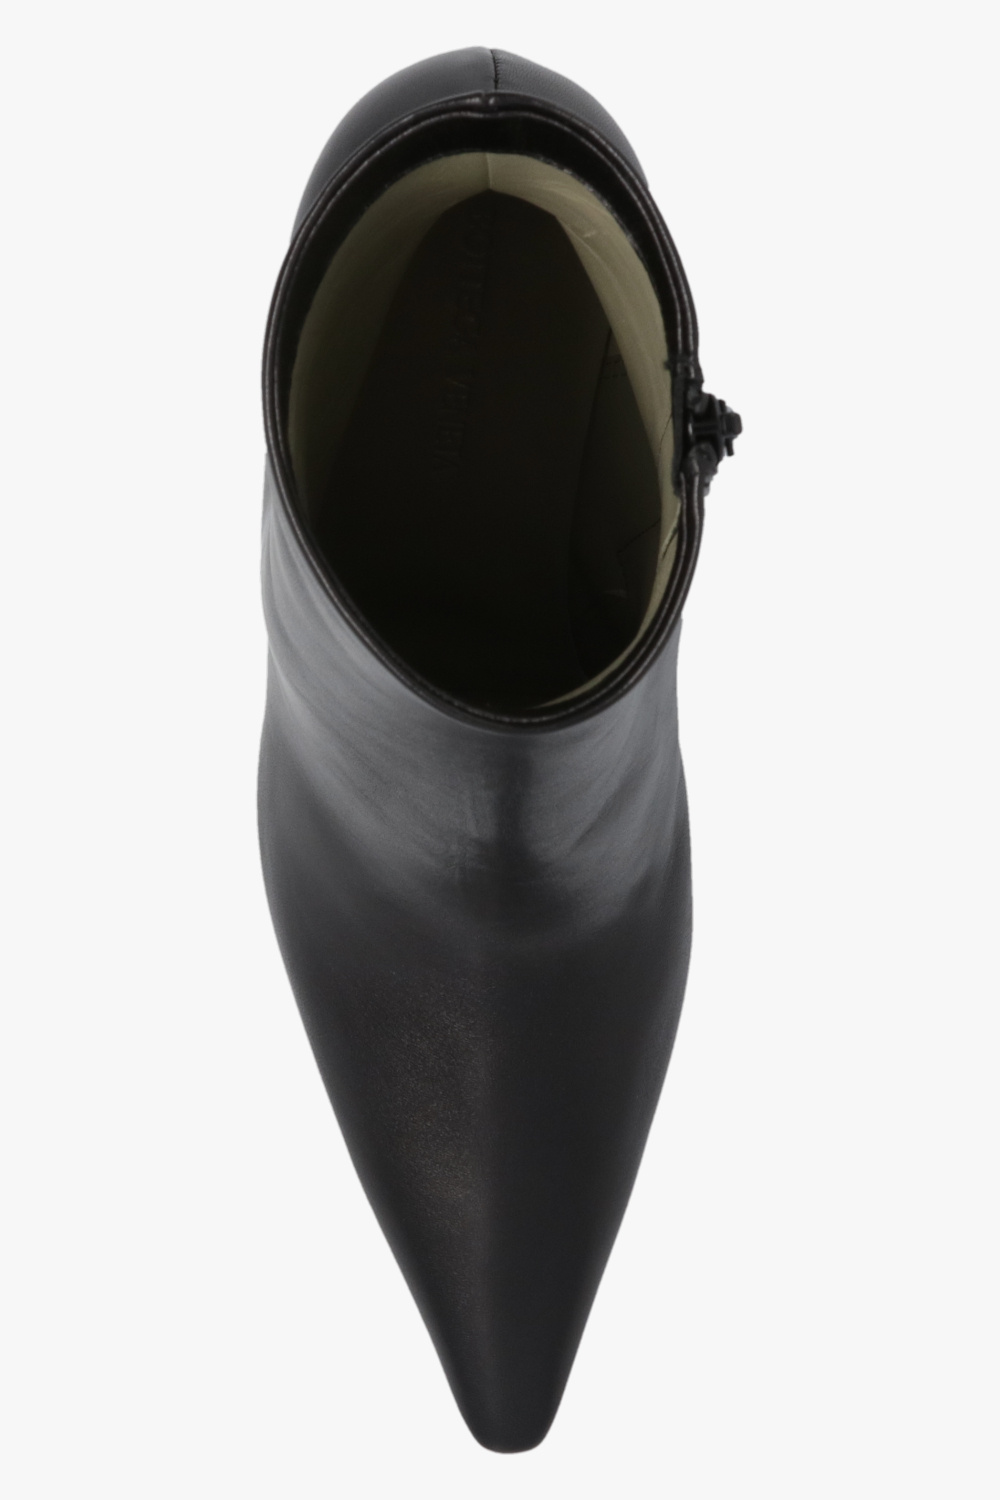 Bottega Veneta ‘Point’ heeled ankle boots